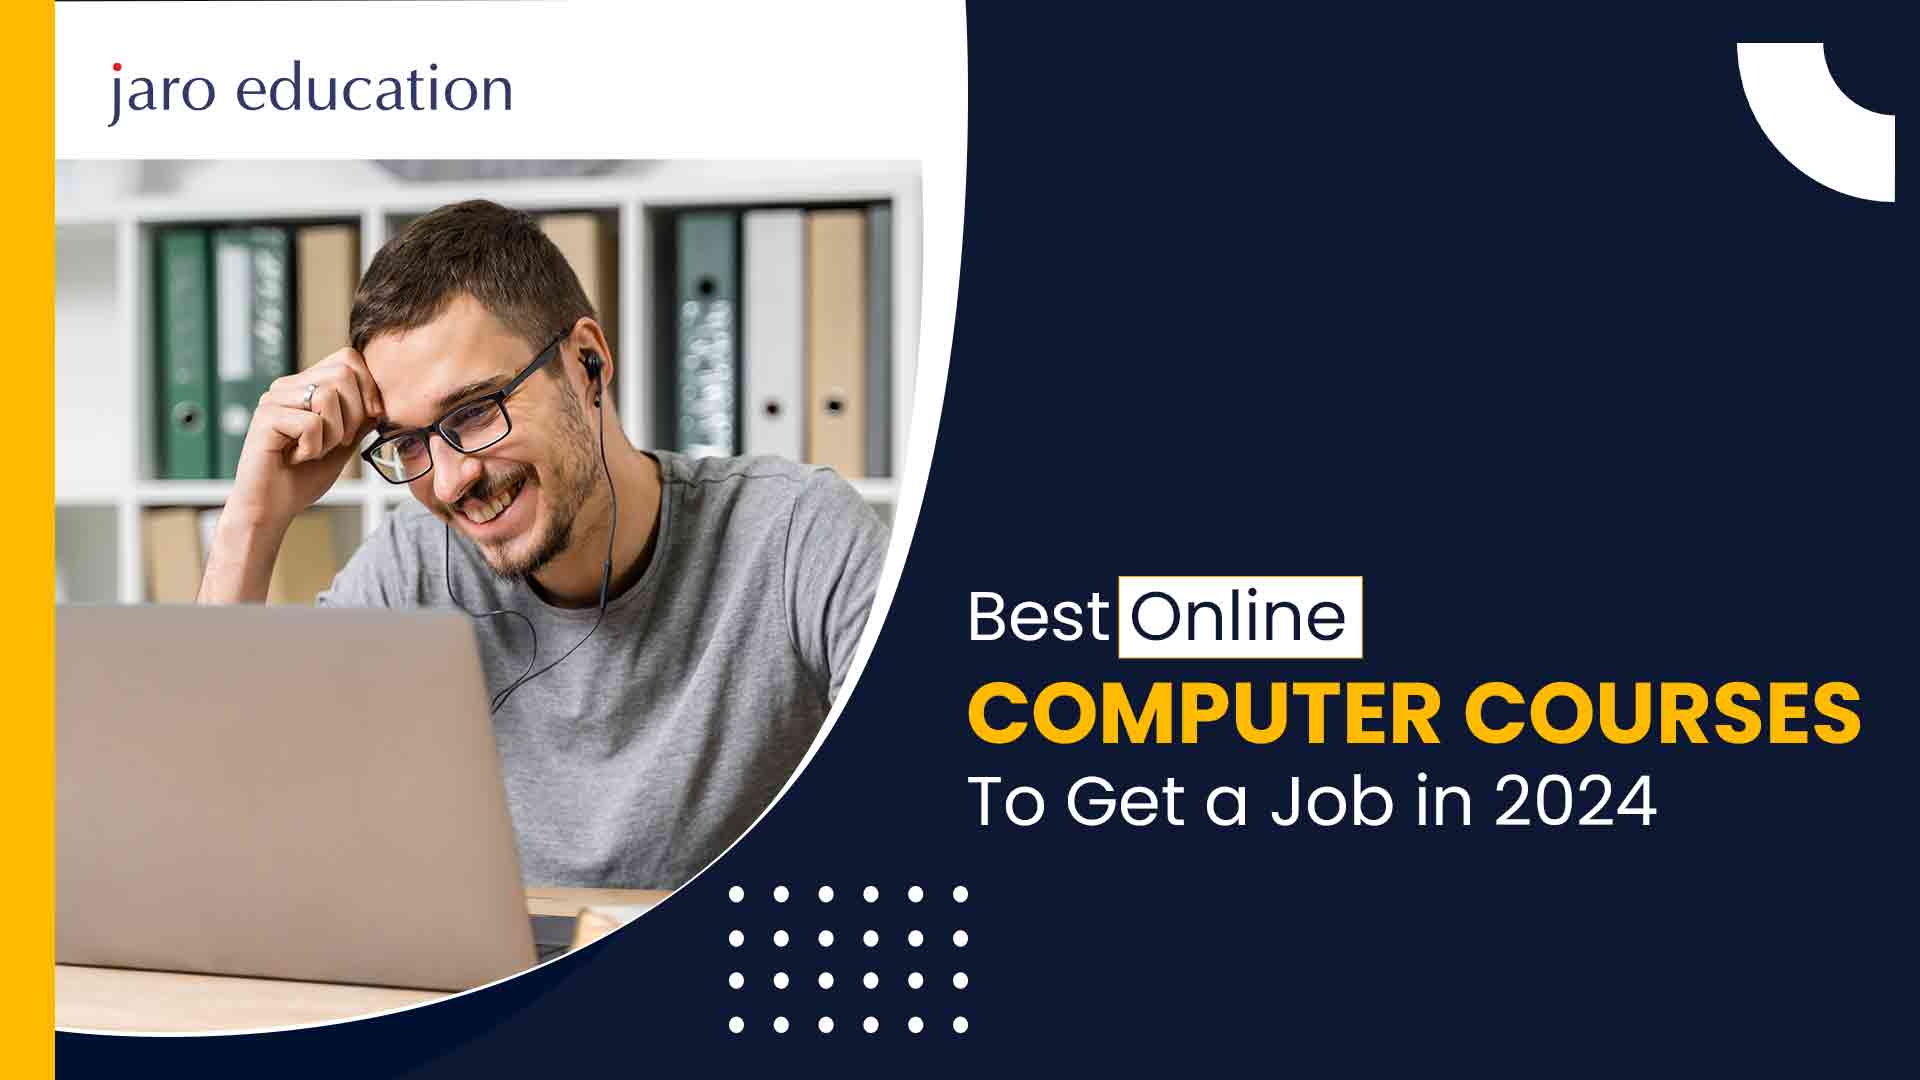 Best Online Computer Courses To Get a Job in 2024